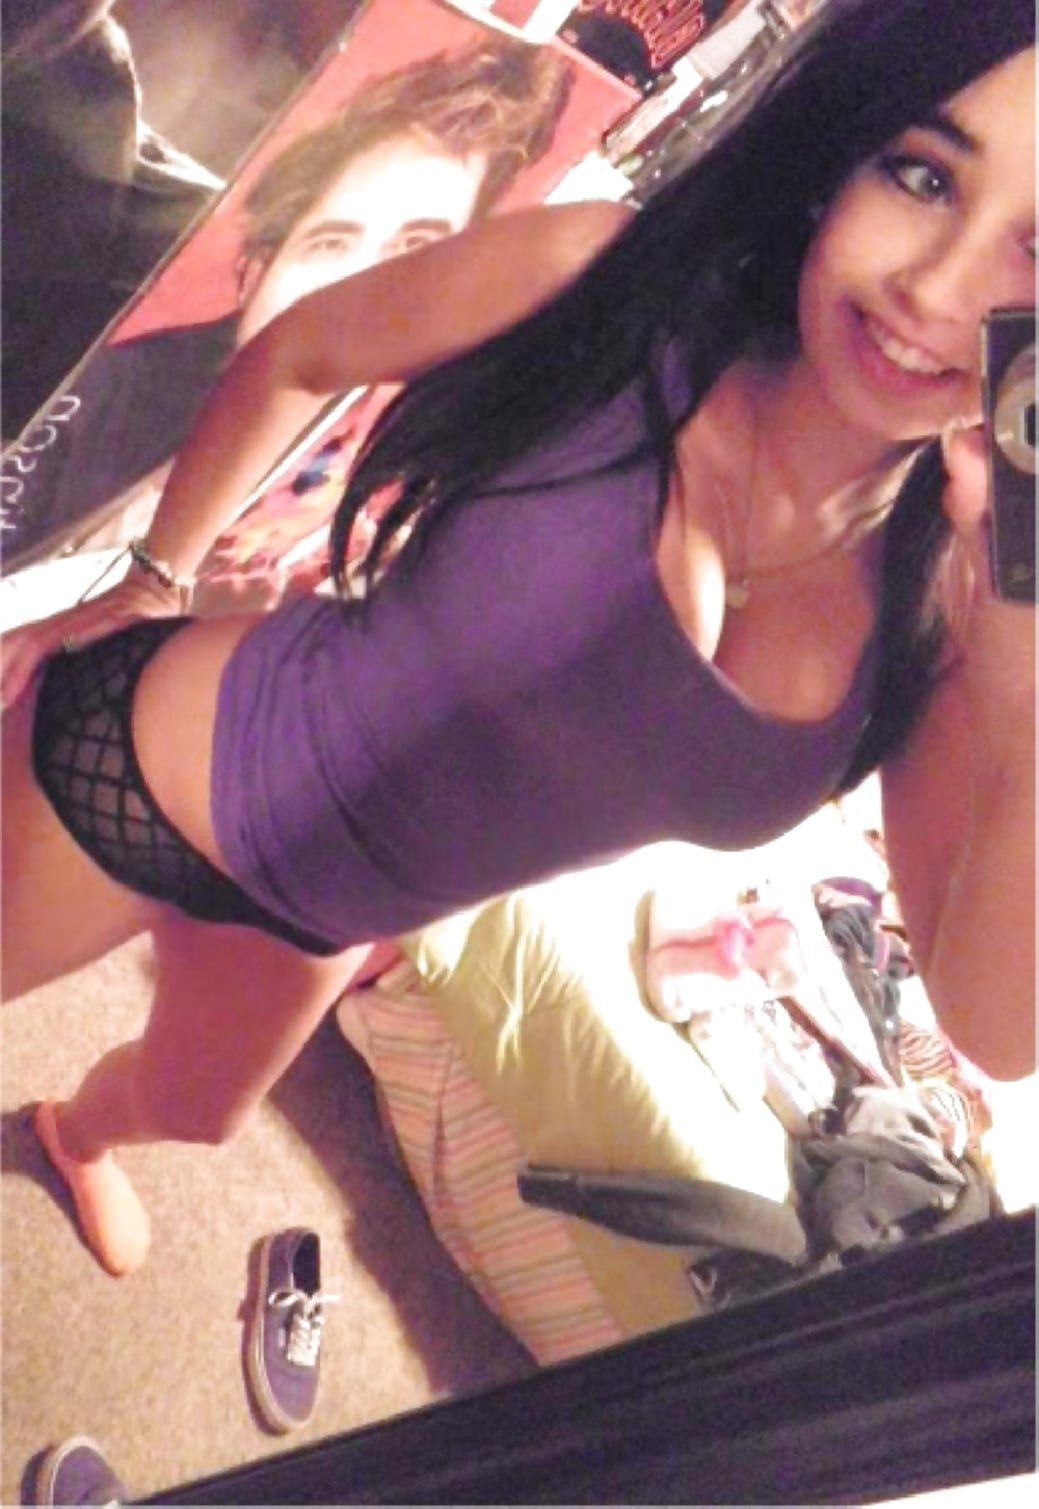 Nice selfie girl with big tits